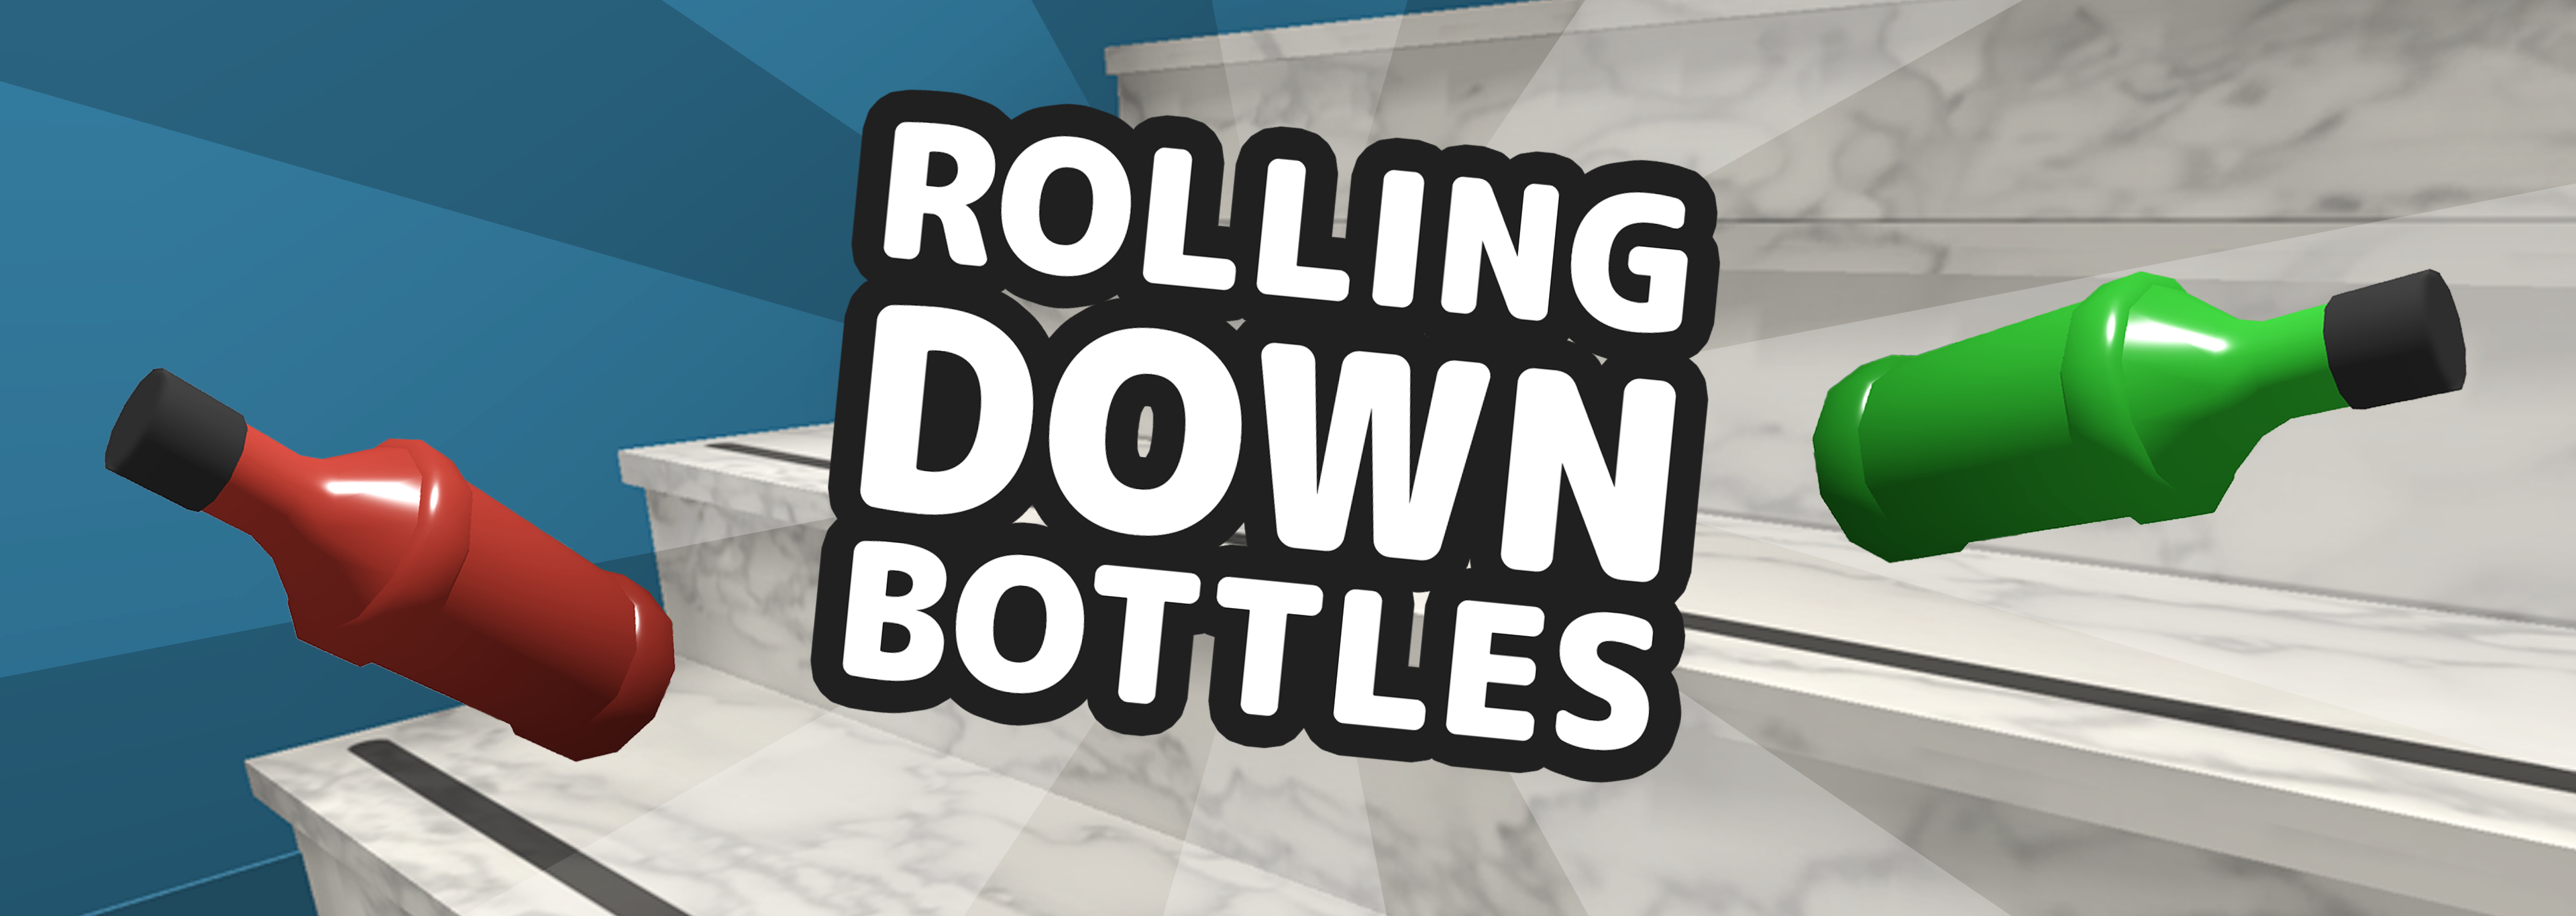 Rolling Down Bottles